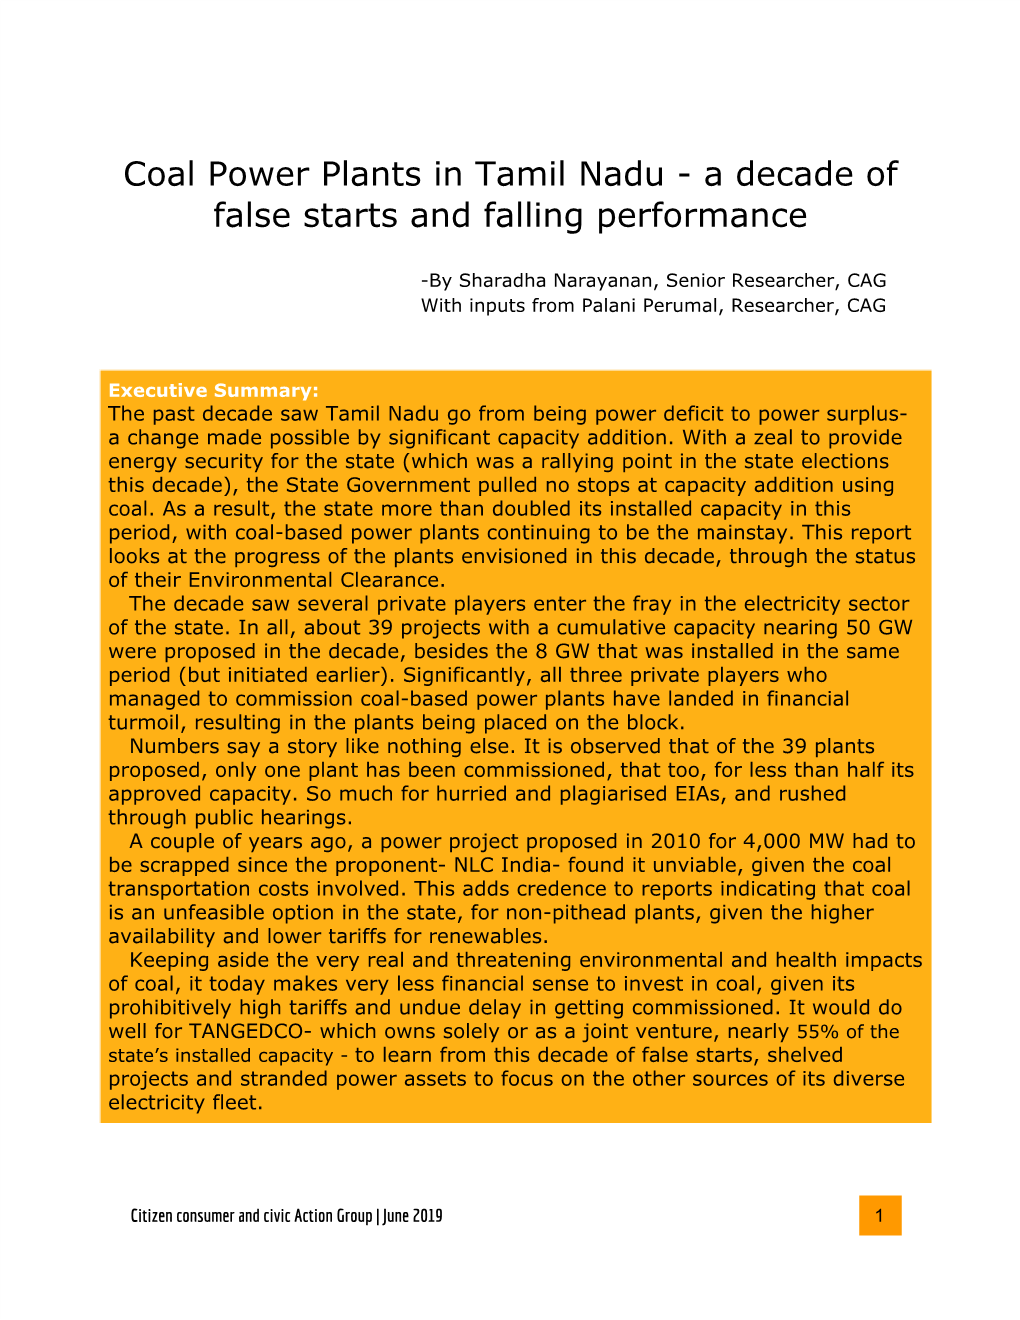 Coal Thermal Power Plants B